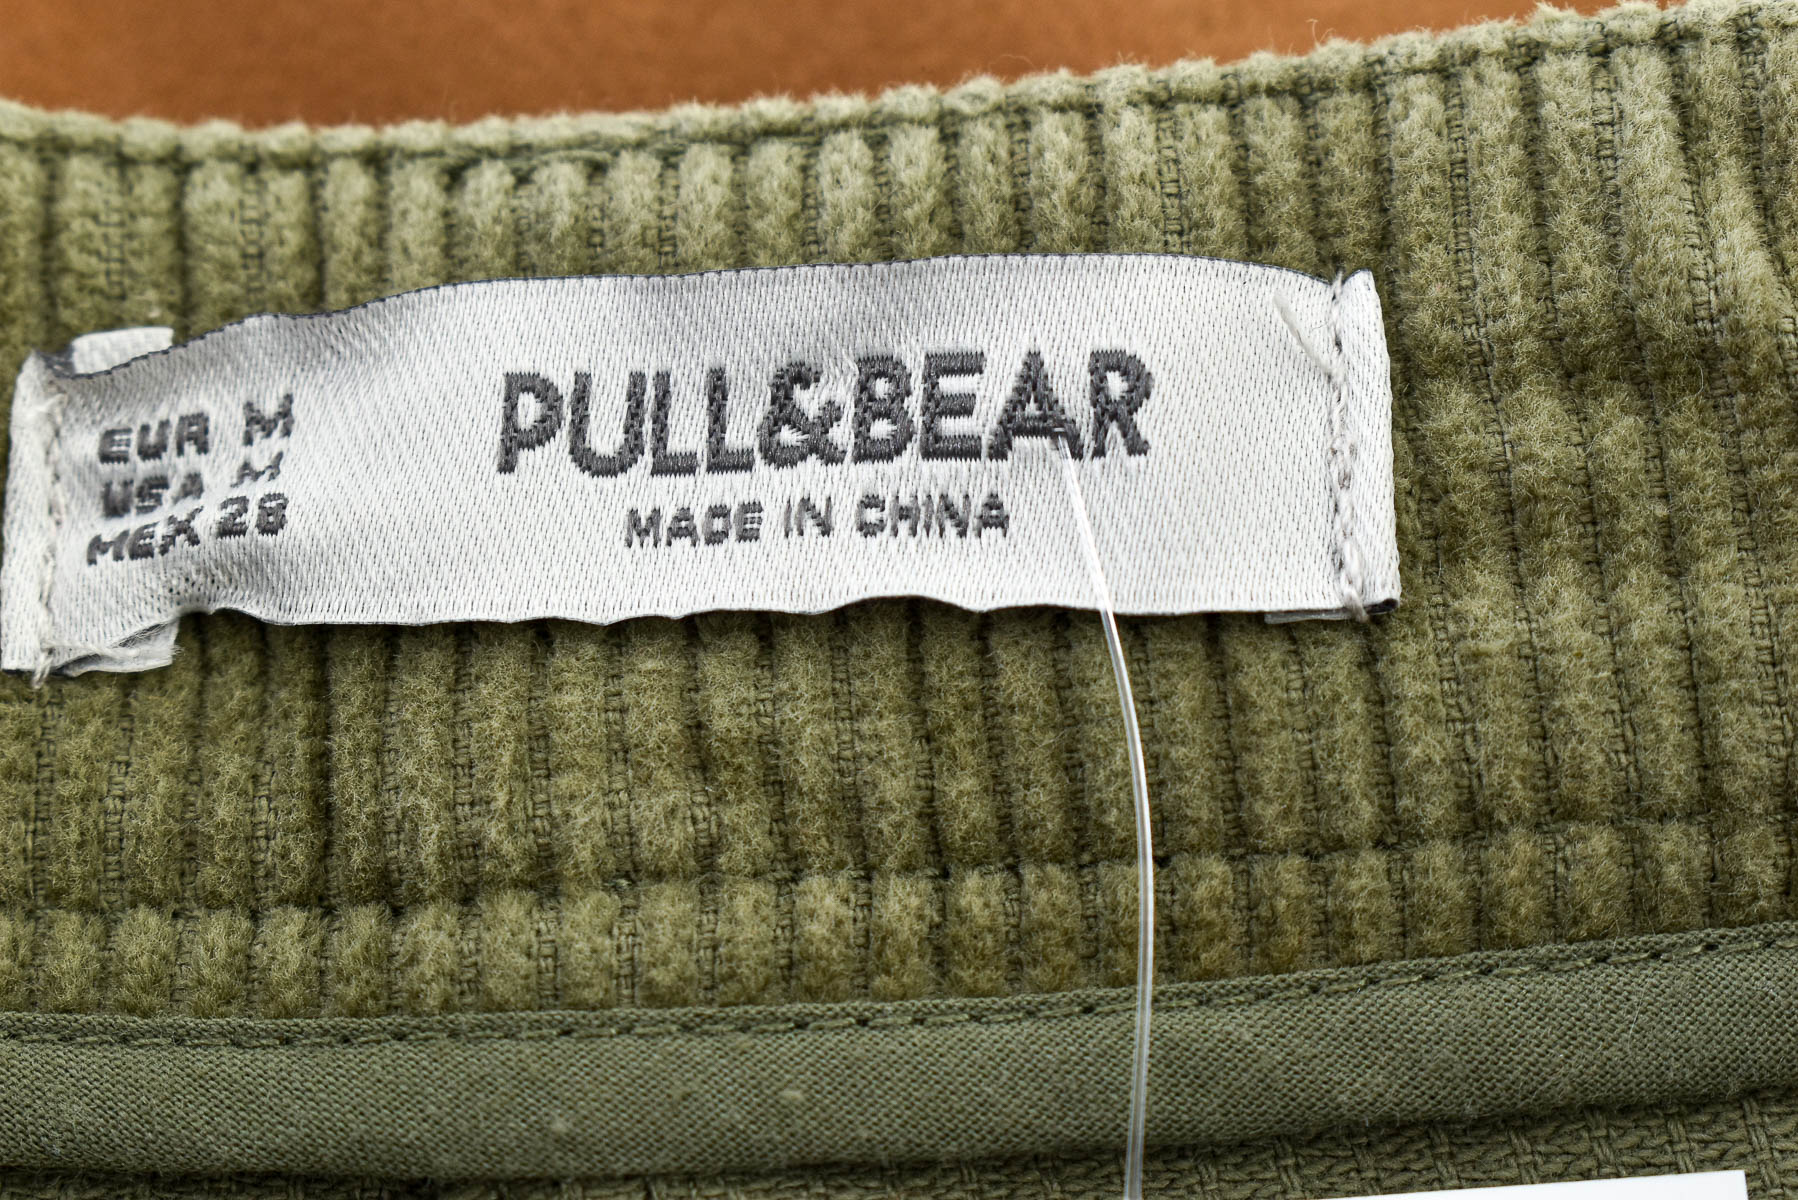 Пола - Pull & Bear - 2